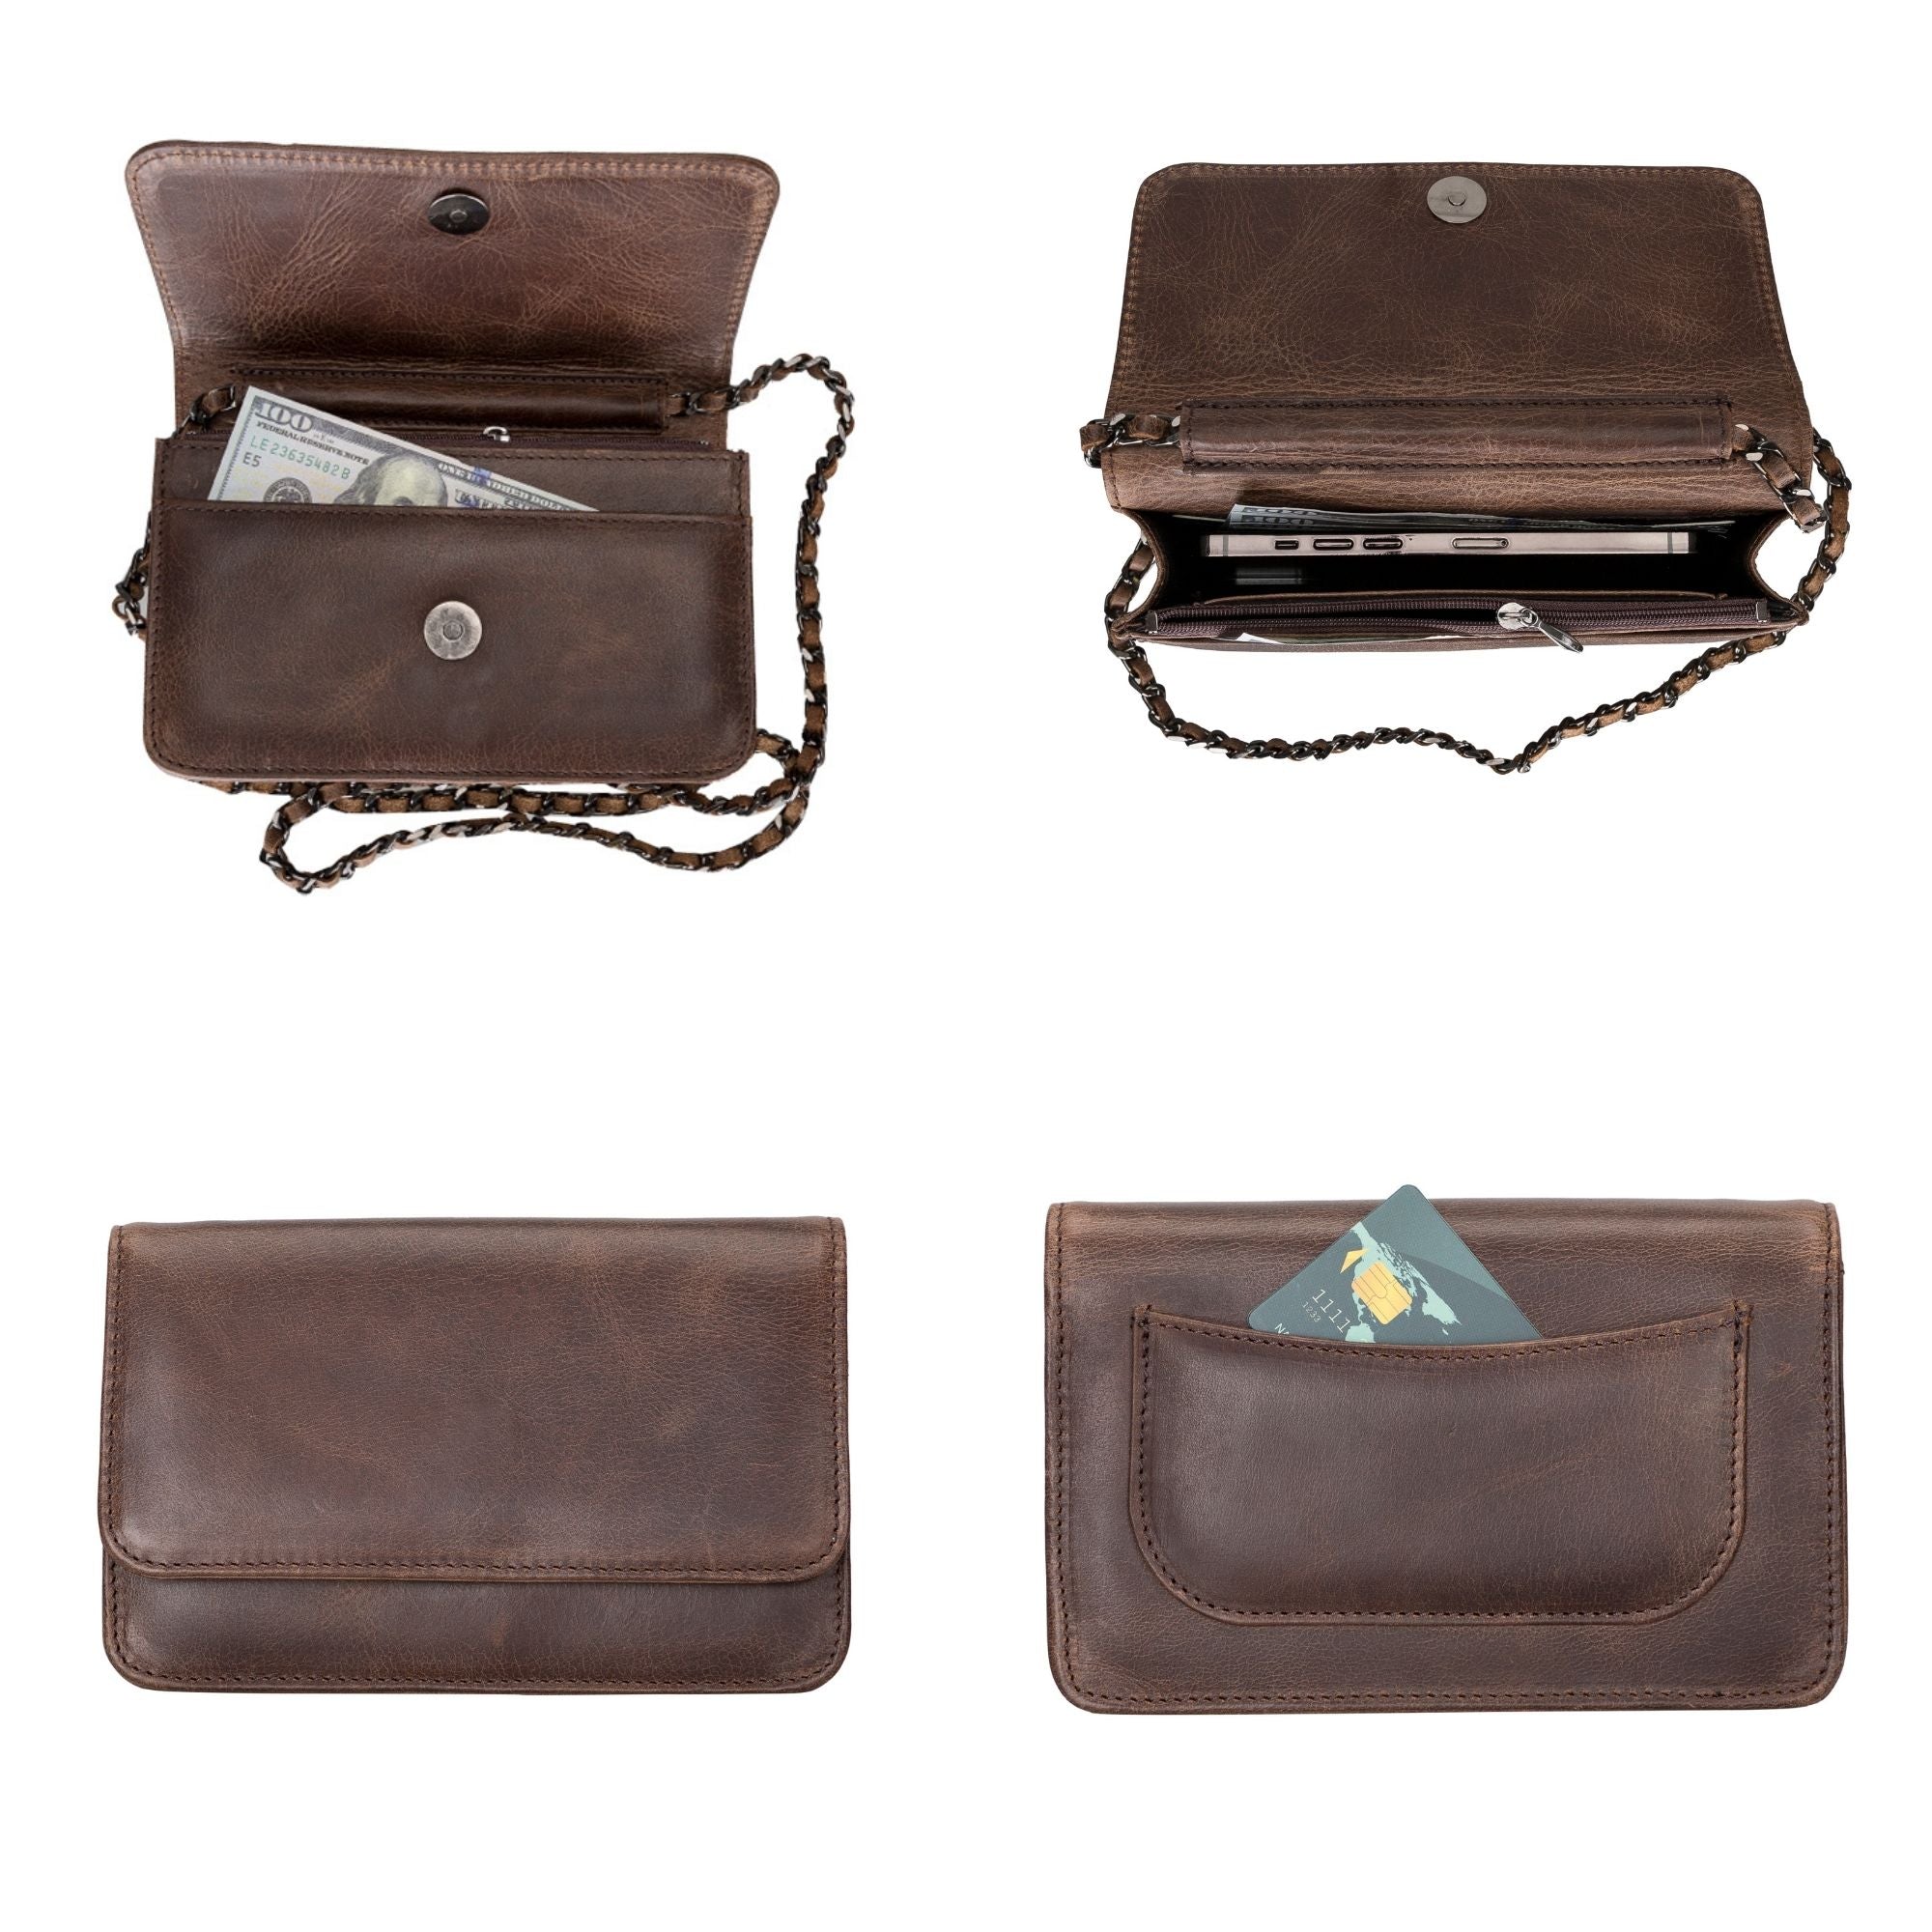 Evanston Minimalist Leather Handbag for Women - Dark Brown - TORONATA